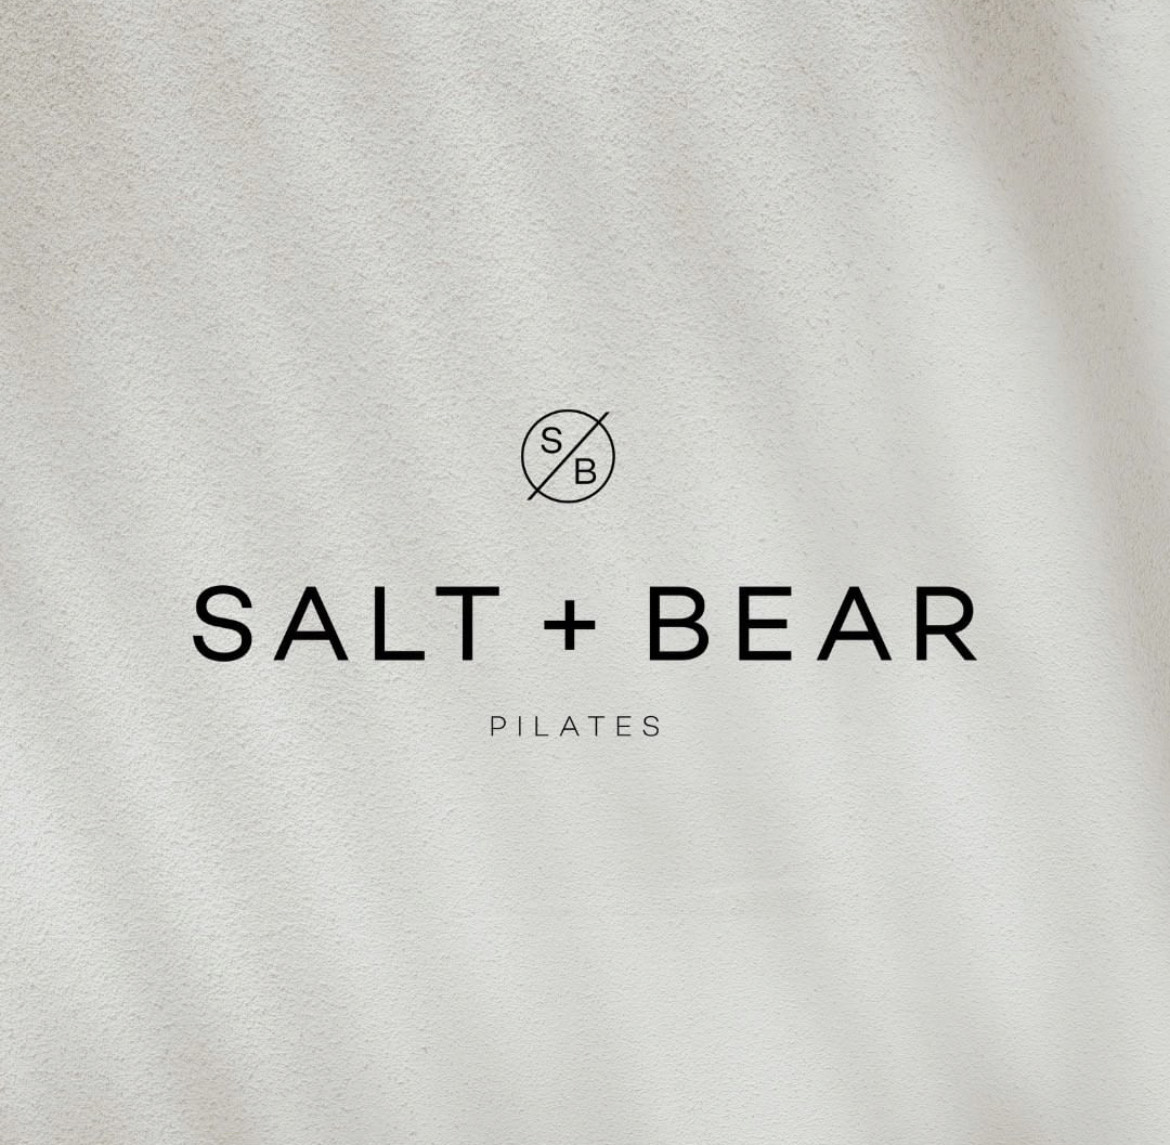 SALT + BEAR Pilates 's logo